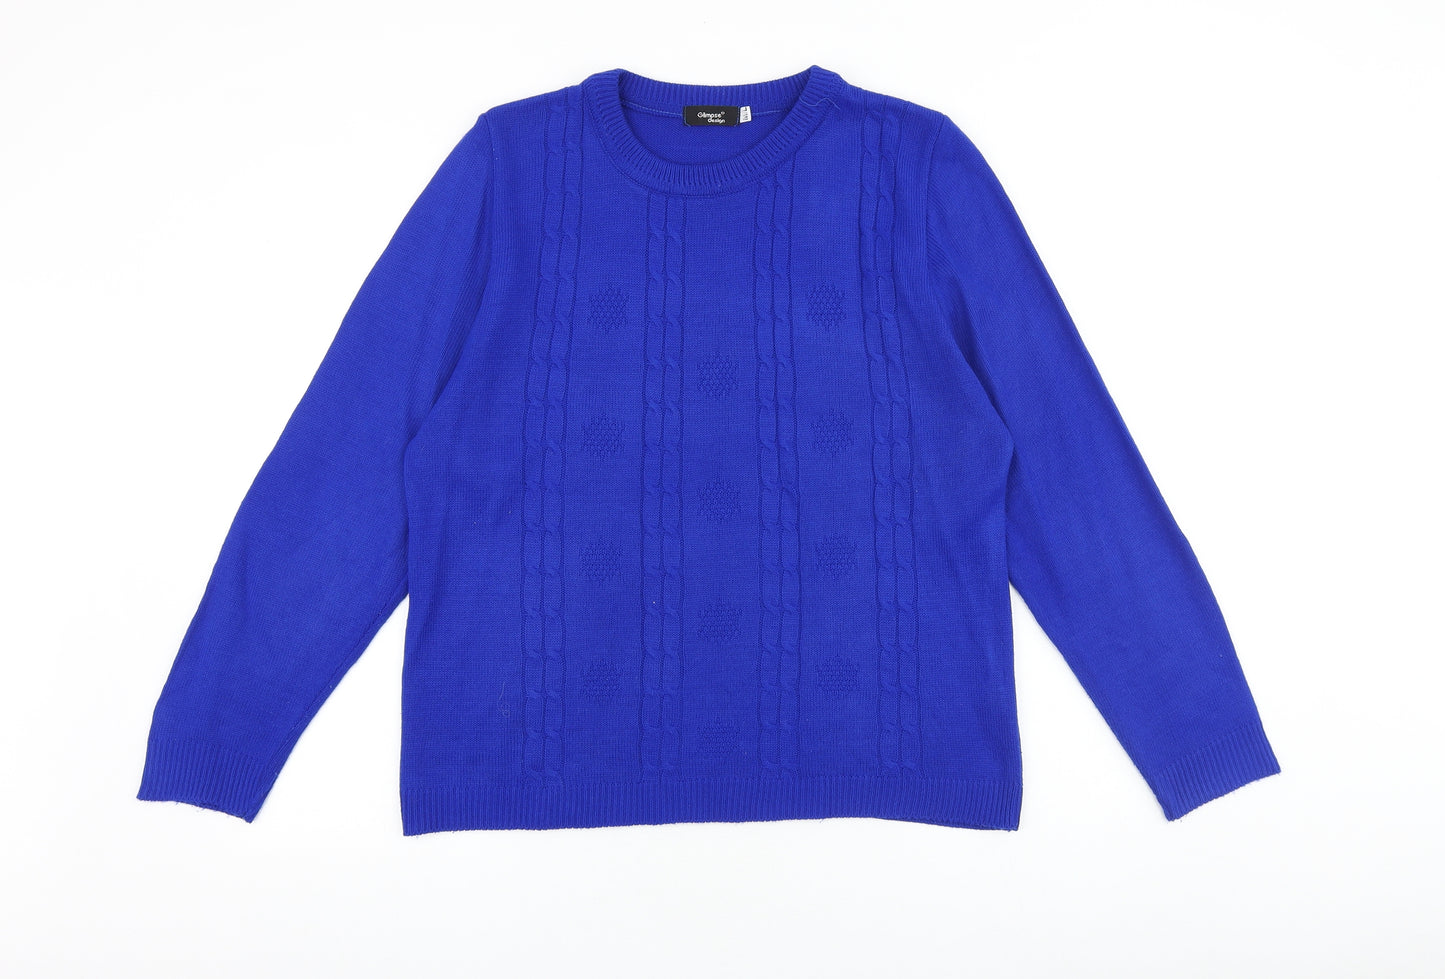 Glimpse Design Womens Blue Crew Neck Acrylic Pullover Jumper Size M